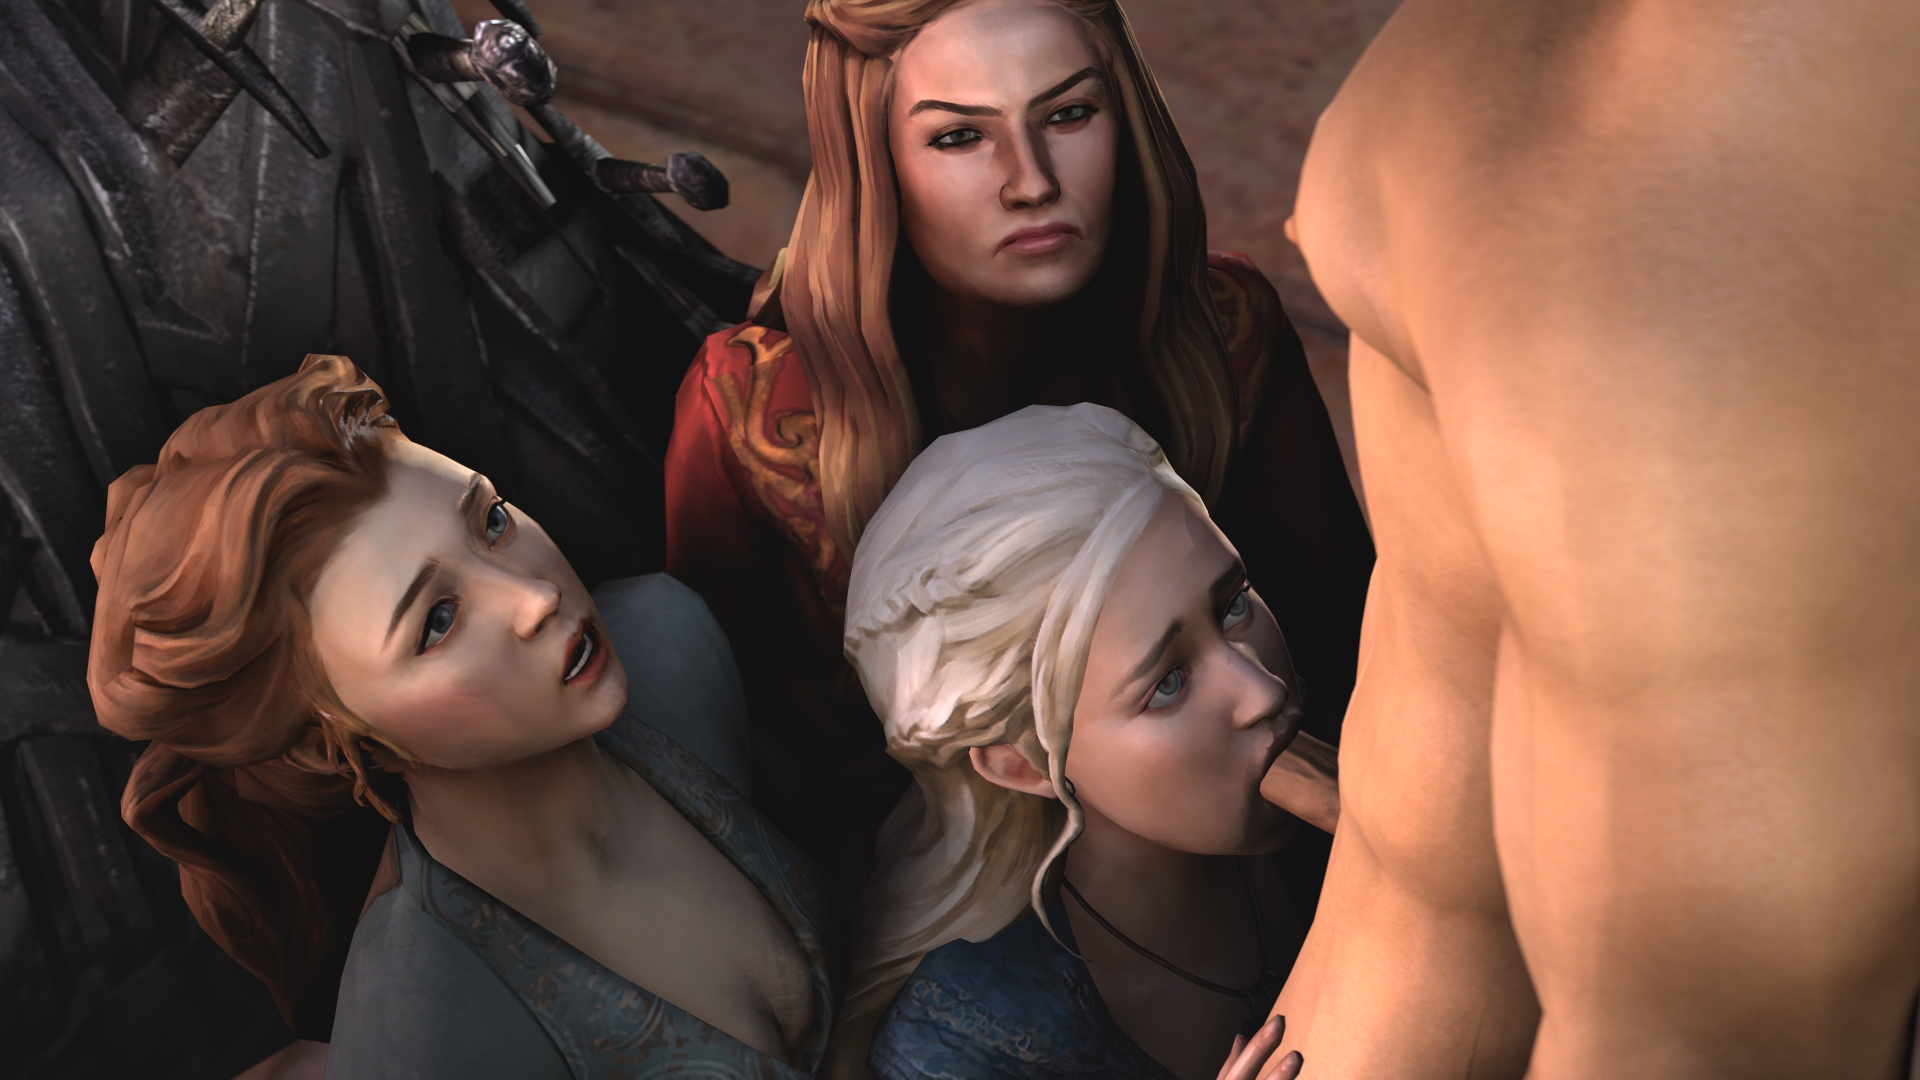 Cersei Porn - Cersei, Daenerys, and Margaery Having Some Fun Together â€“ Nerd Porn!